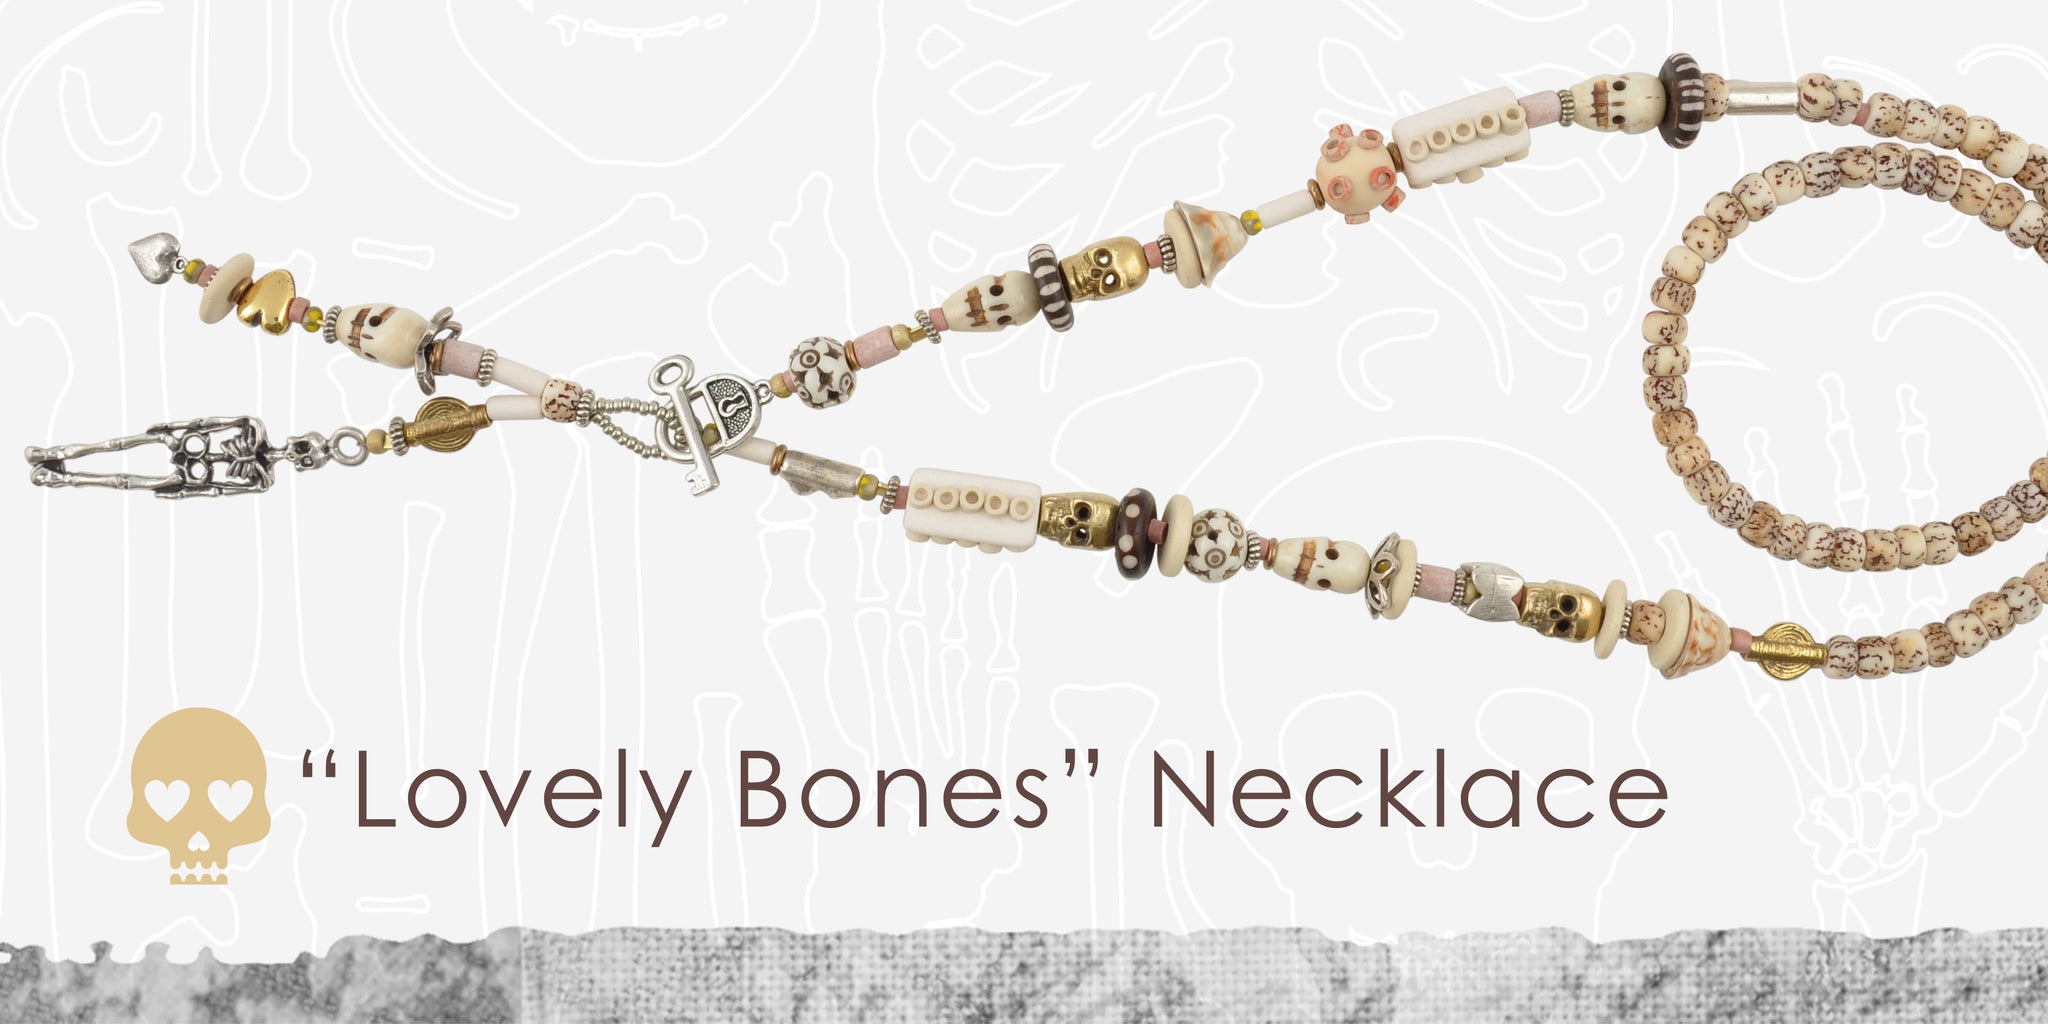 Lovely Bones Necklace choiyeonhee